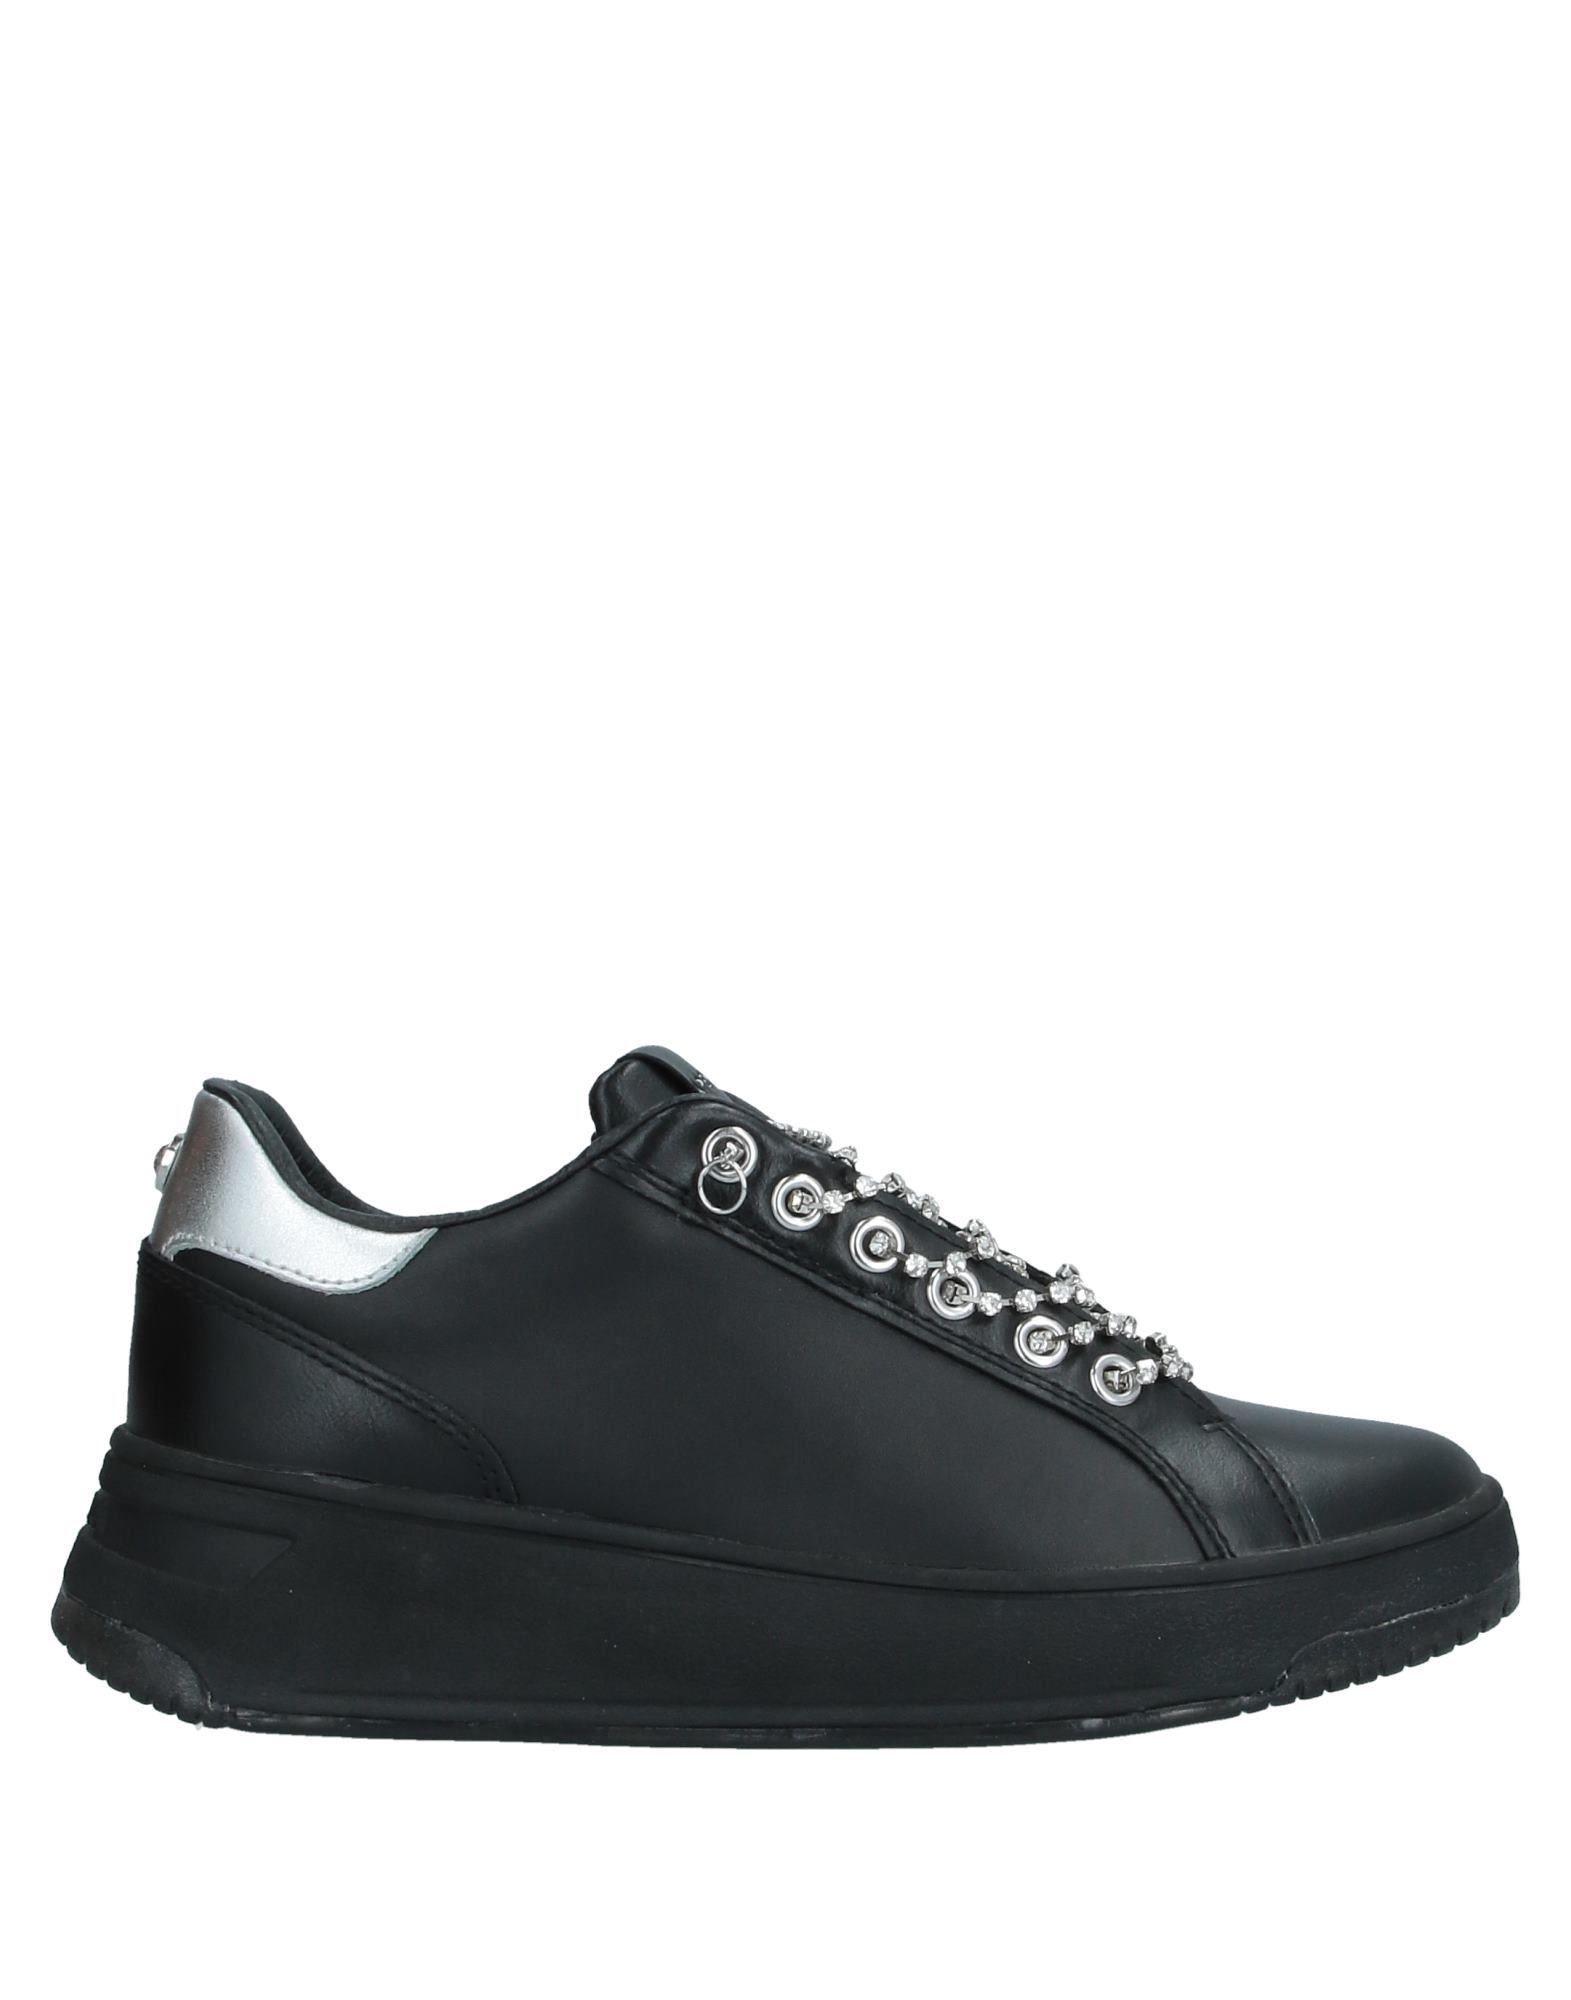 Apepazza Sneakers In Black